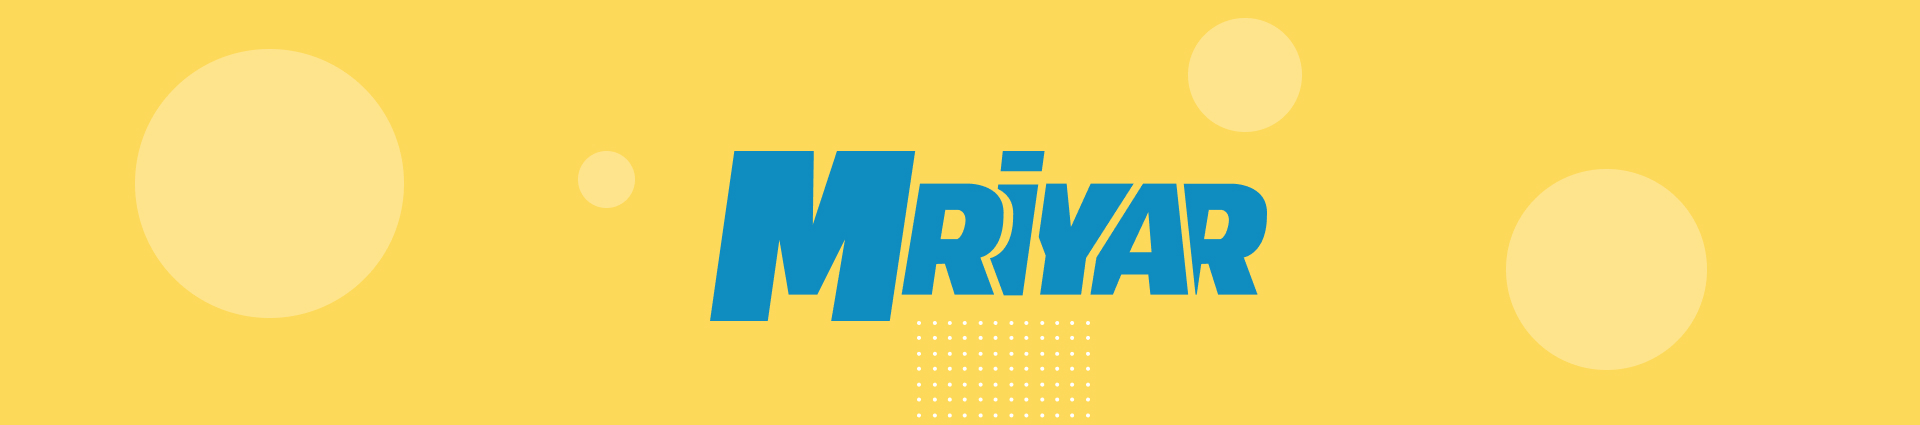 Mriyar - an Unprecedented Automotive AI Solution